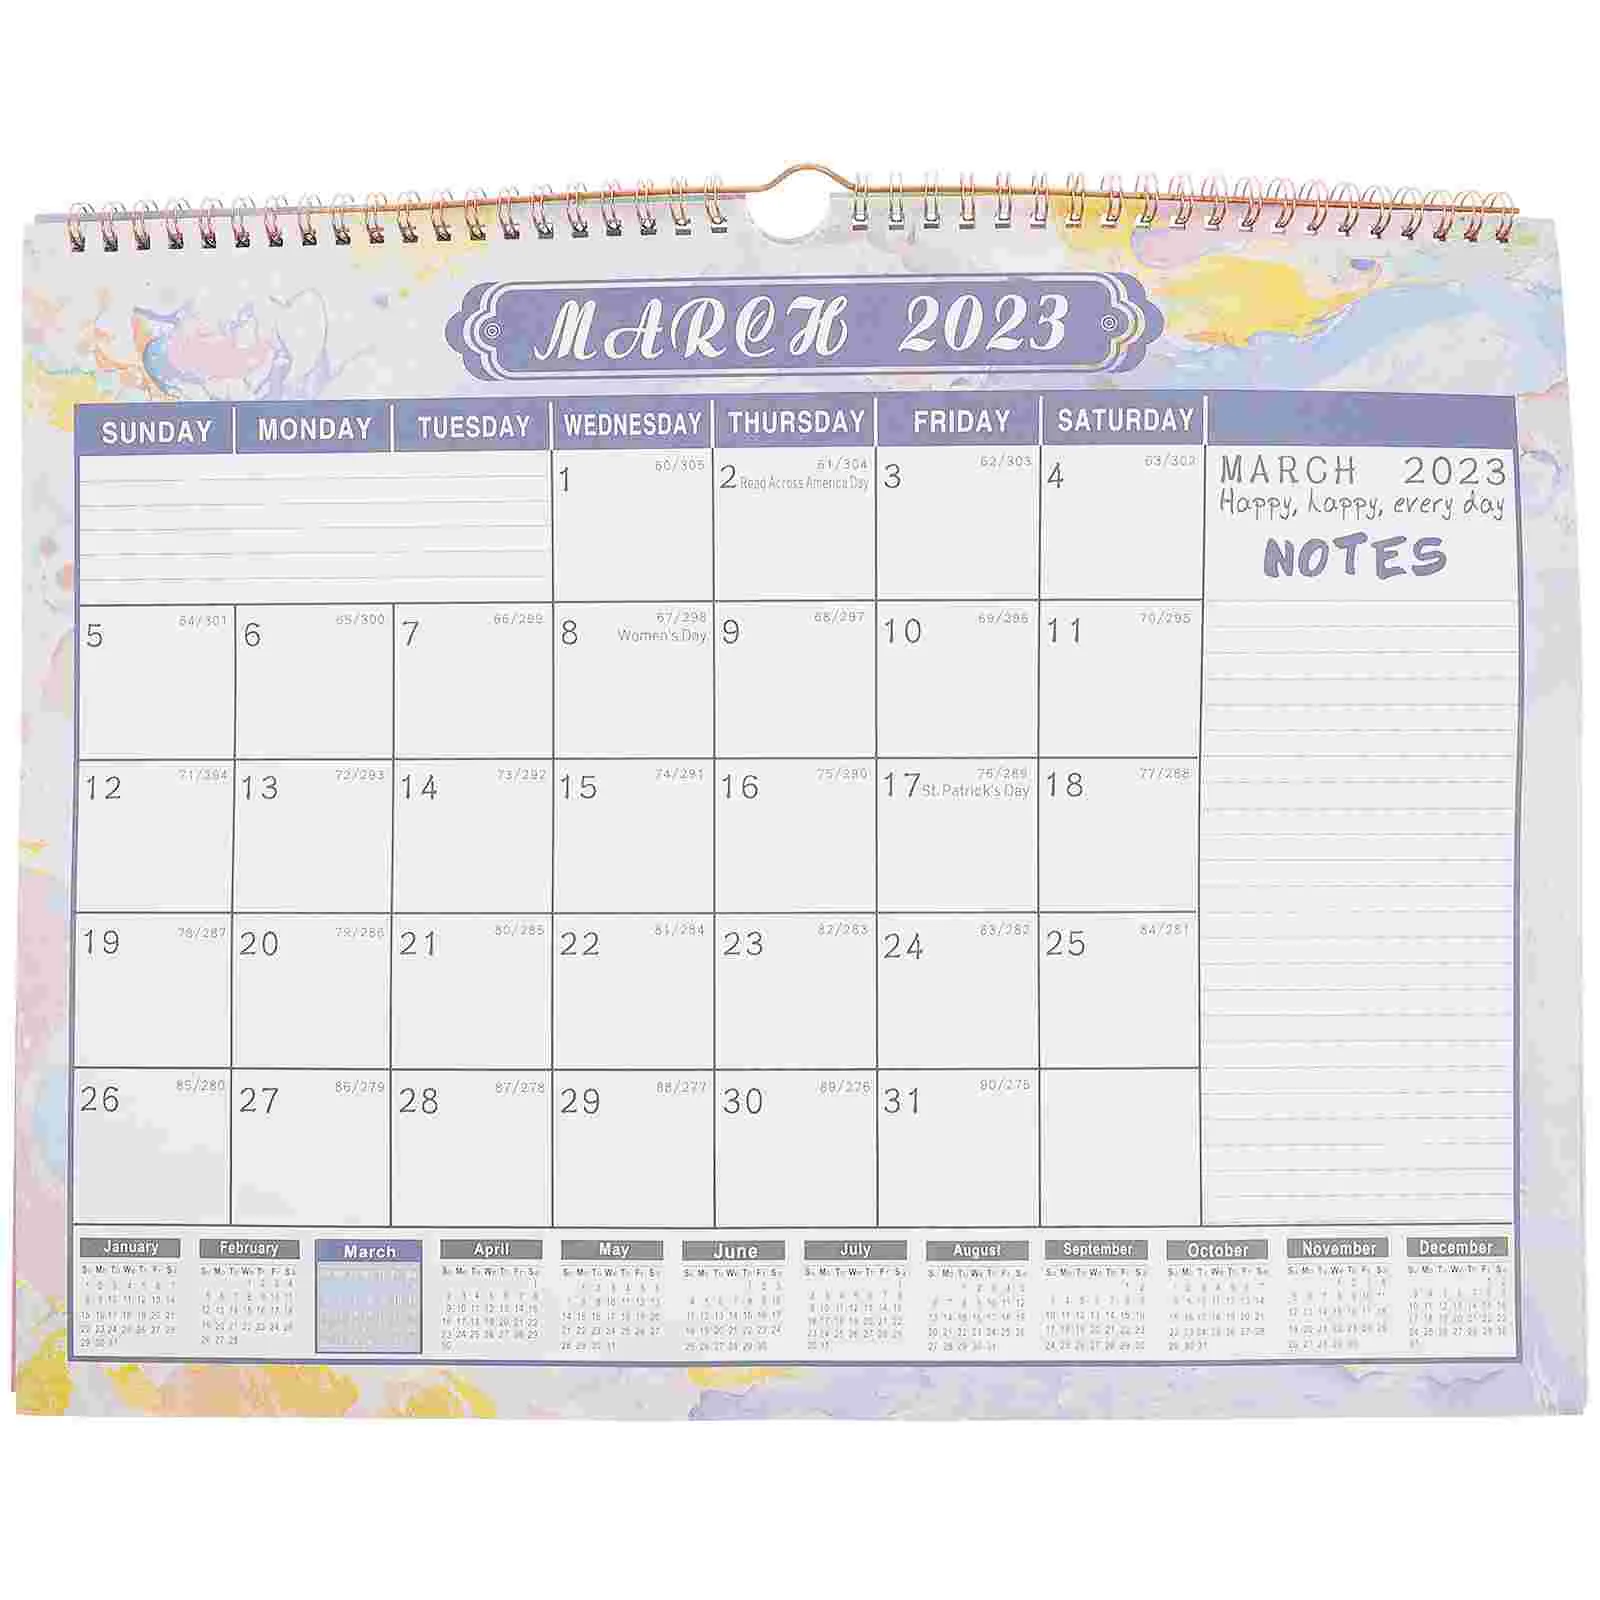 

Calendar Wall Planner 2023 Hanging Monthly Office Organizer Memo Schedule Year Planning Calendars Do Journal List Note Months